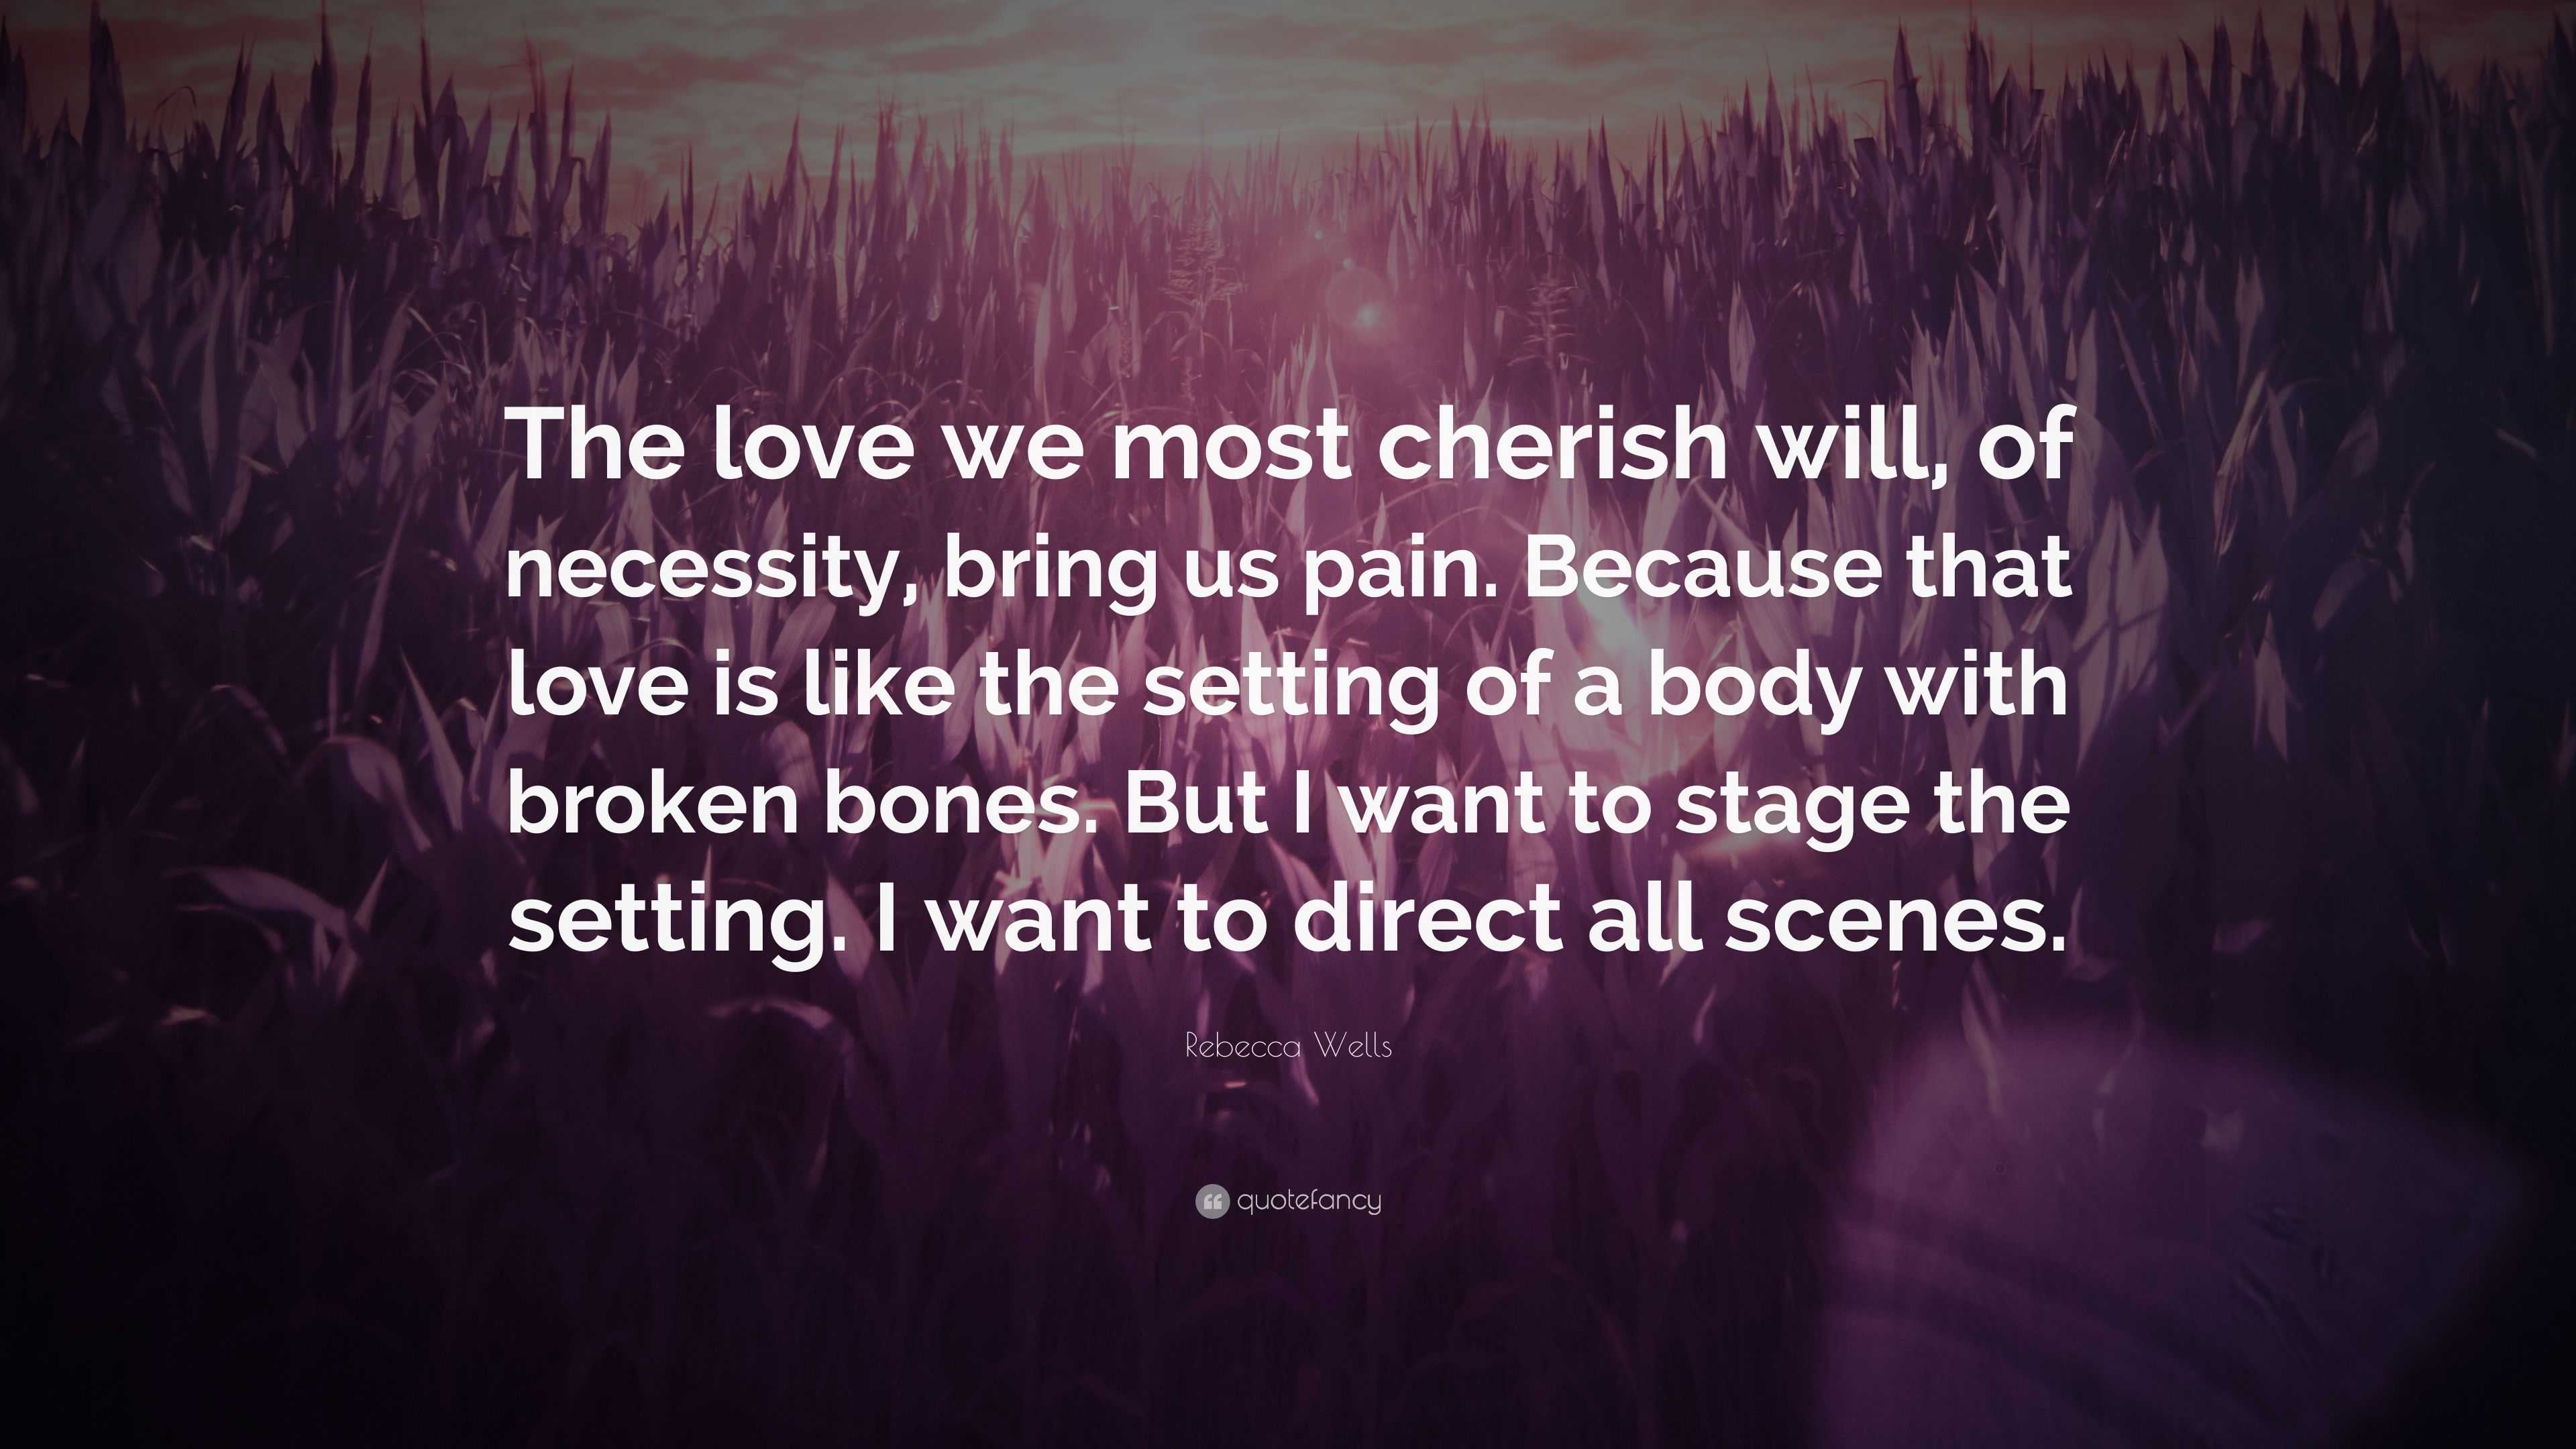 Rebecca Wells Quote: “The love we most cherish will, of necessity